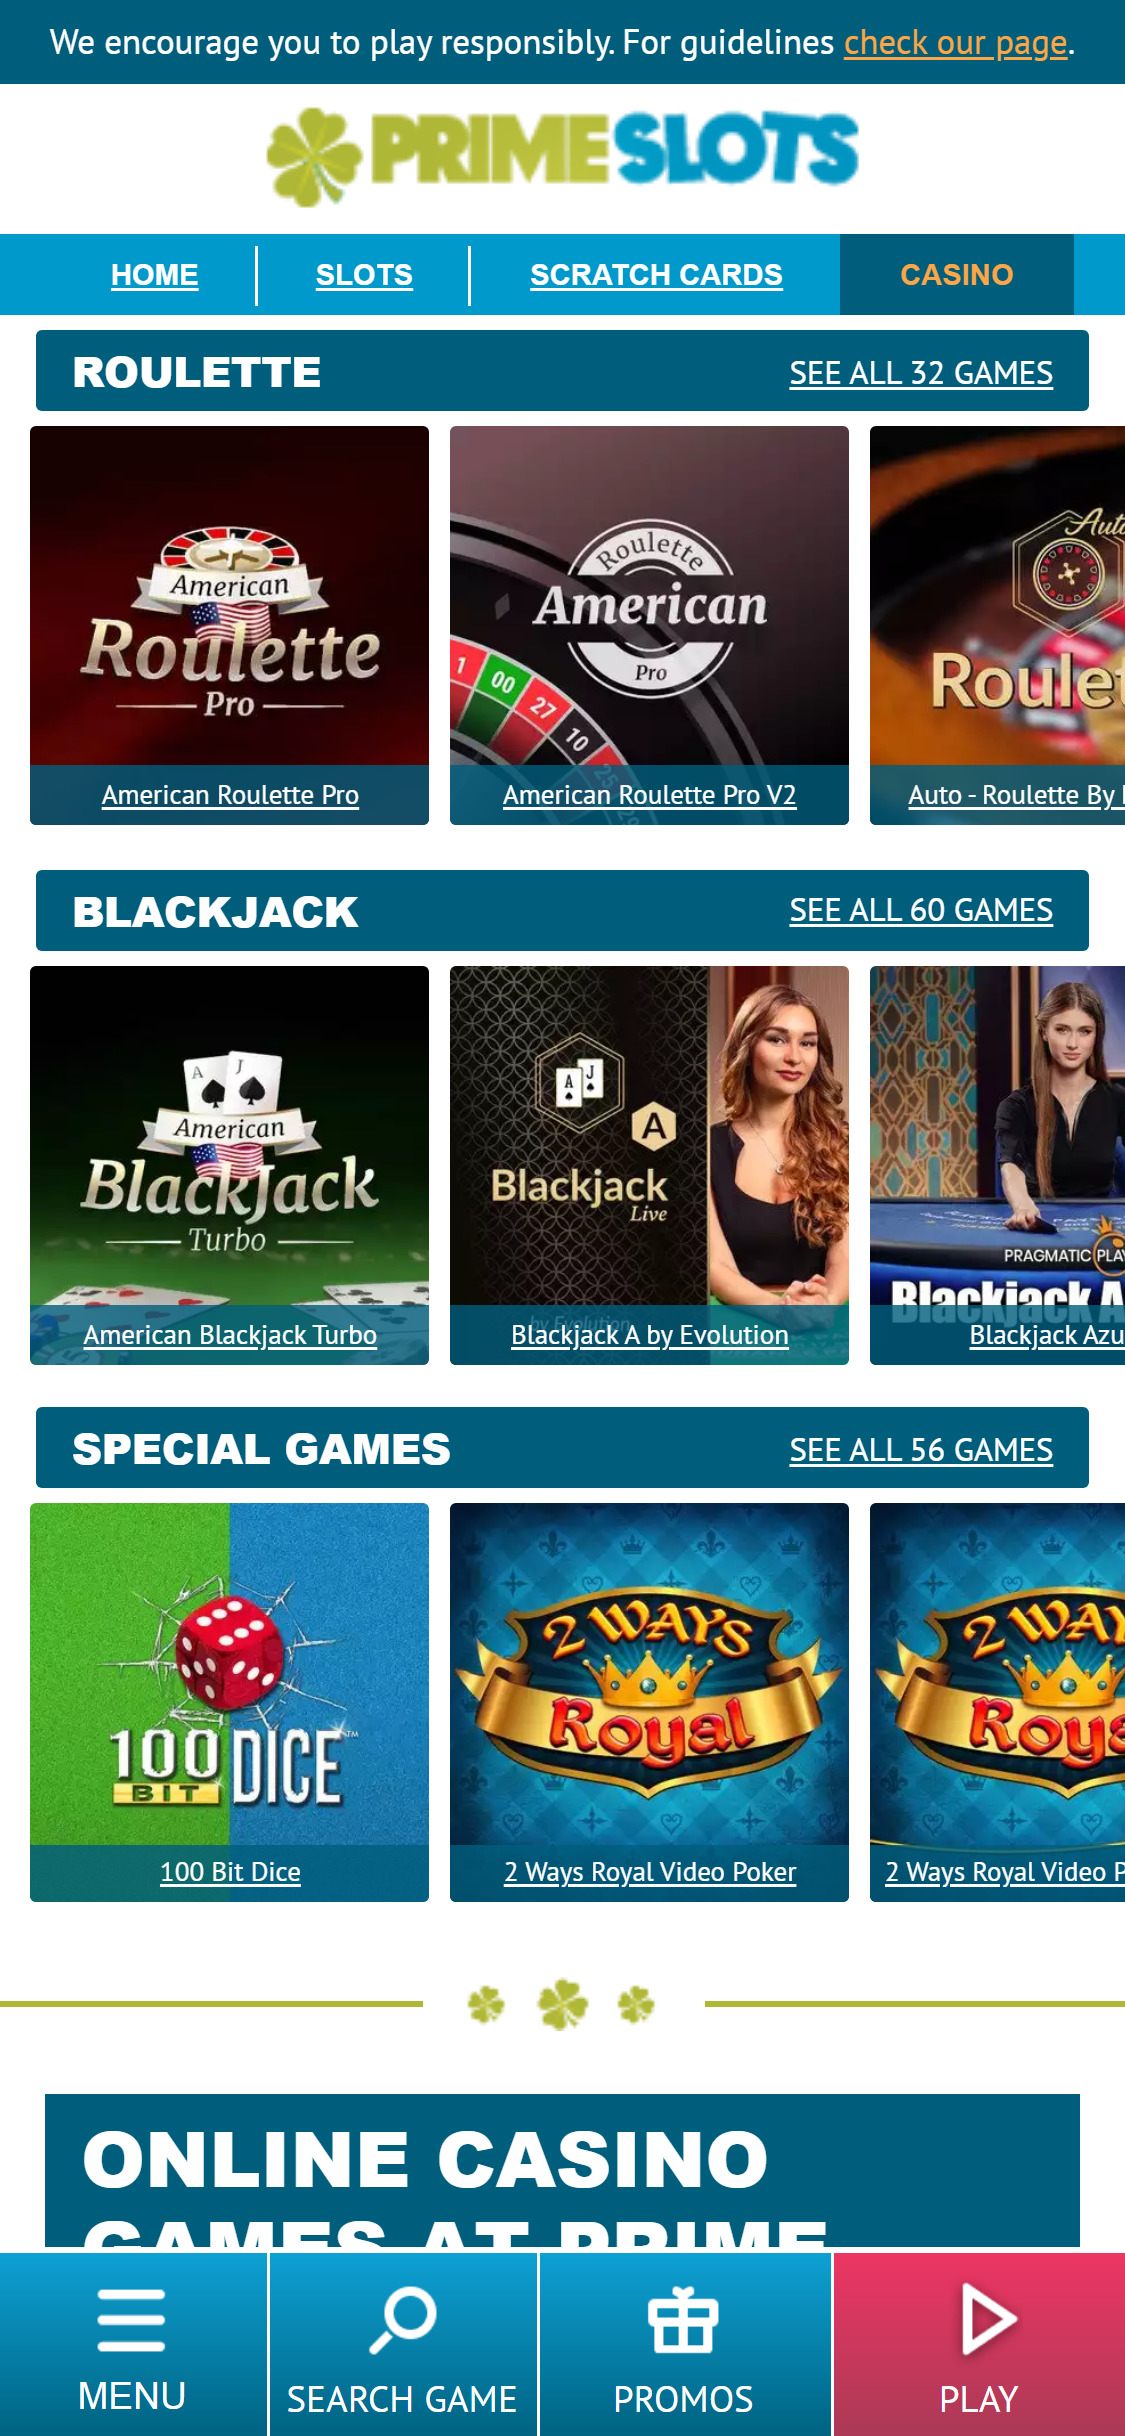 Prime Slots UK Casino Mobile Games Review